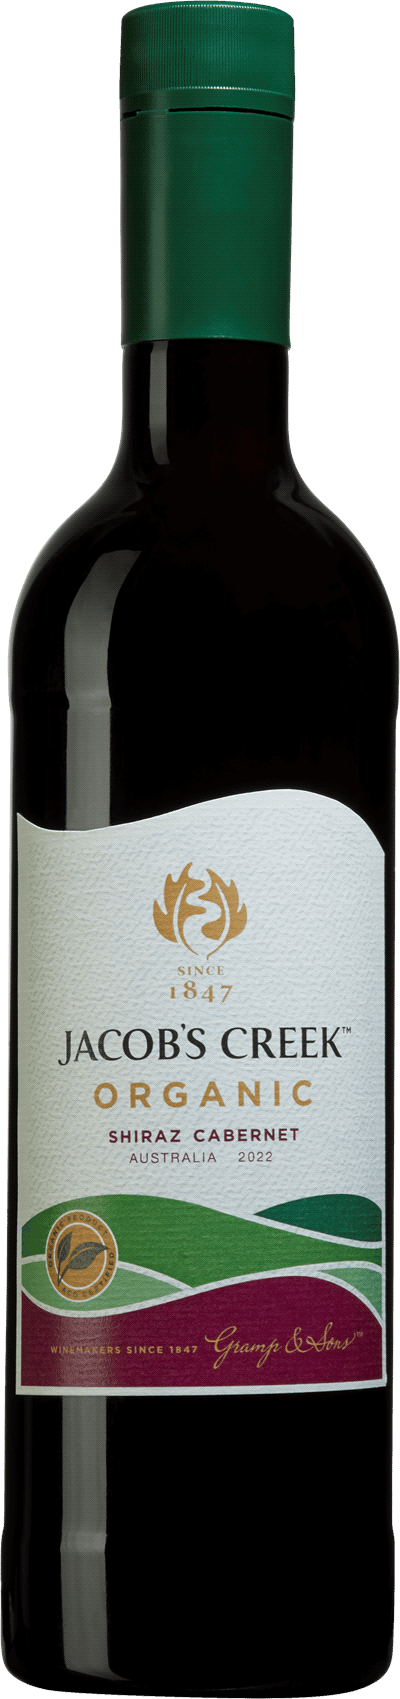 Jacob's Creek Shiraz Cabernet Organic, 2022